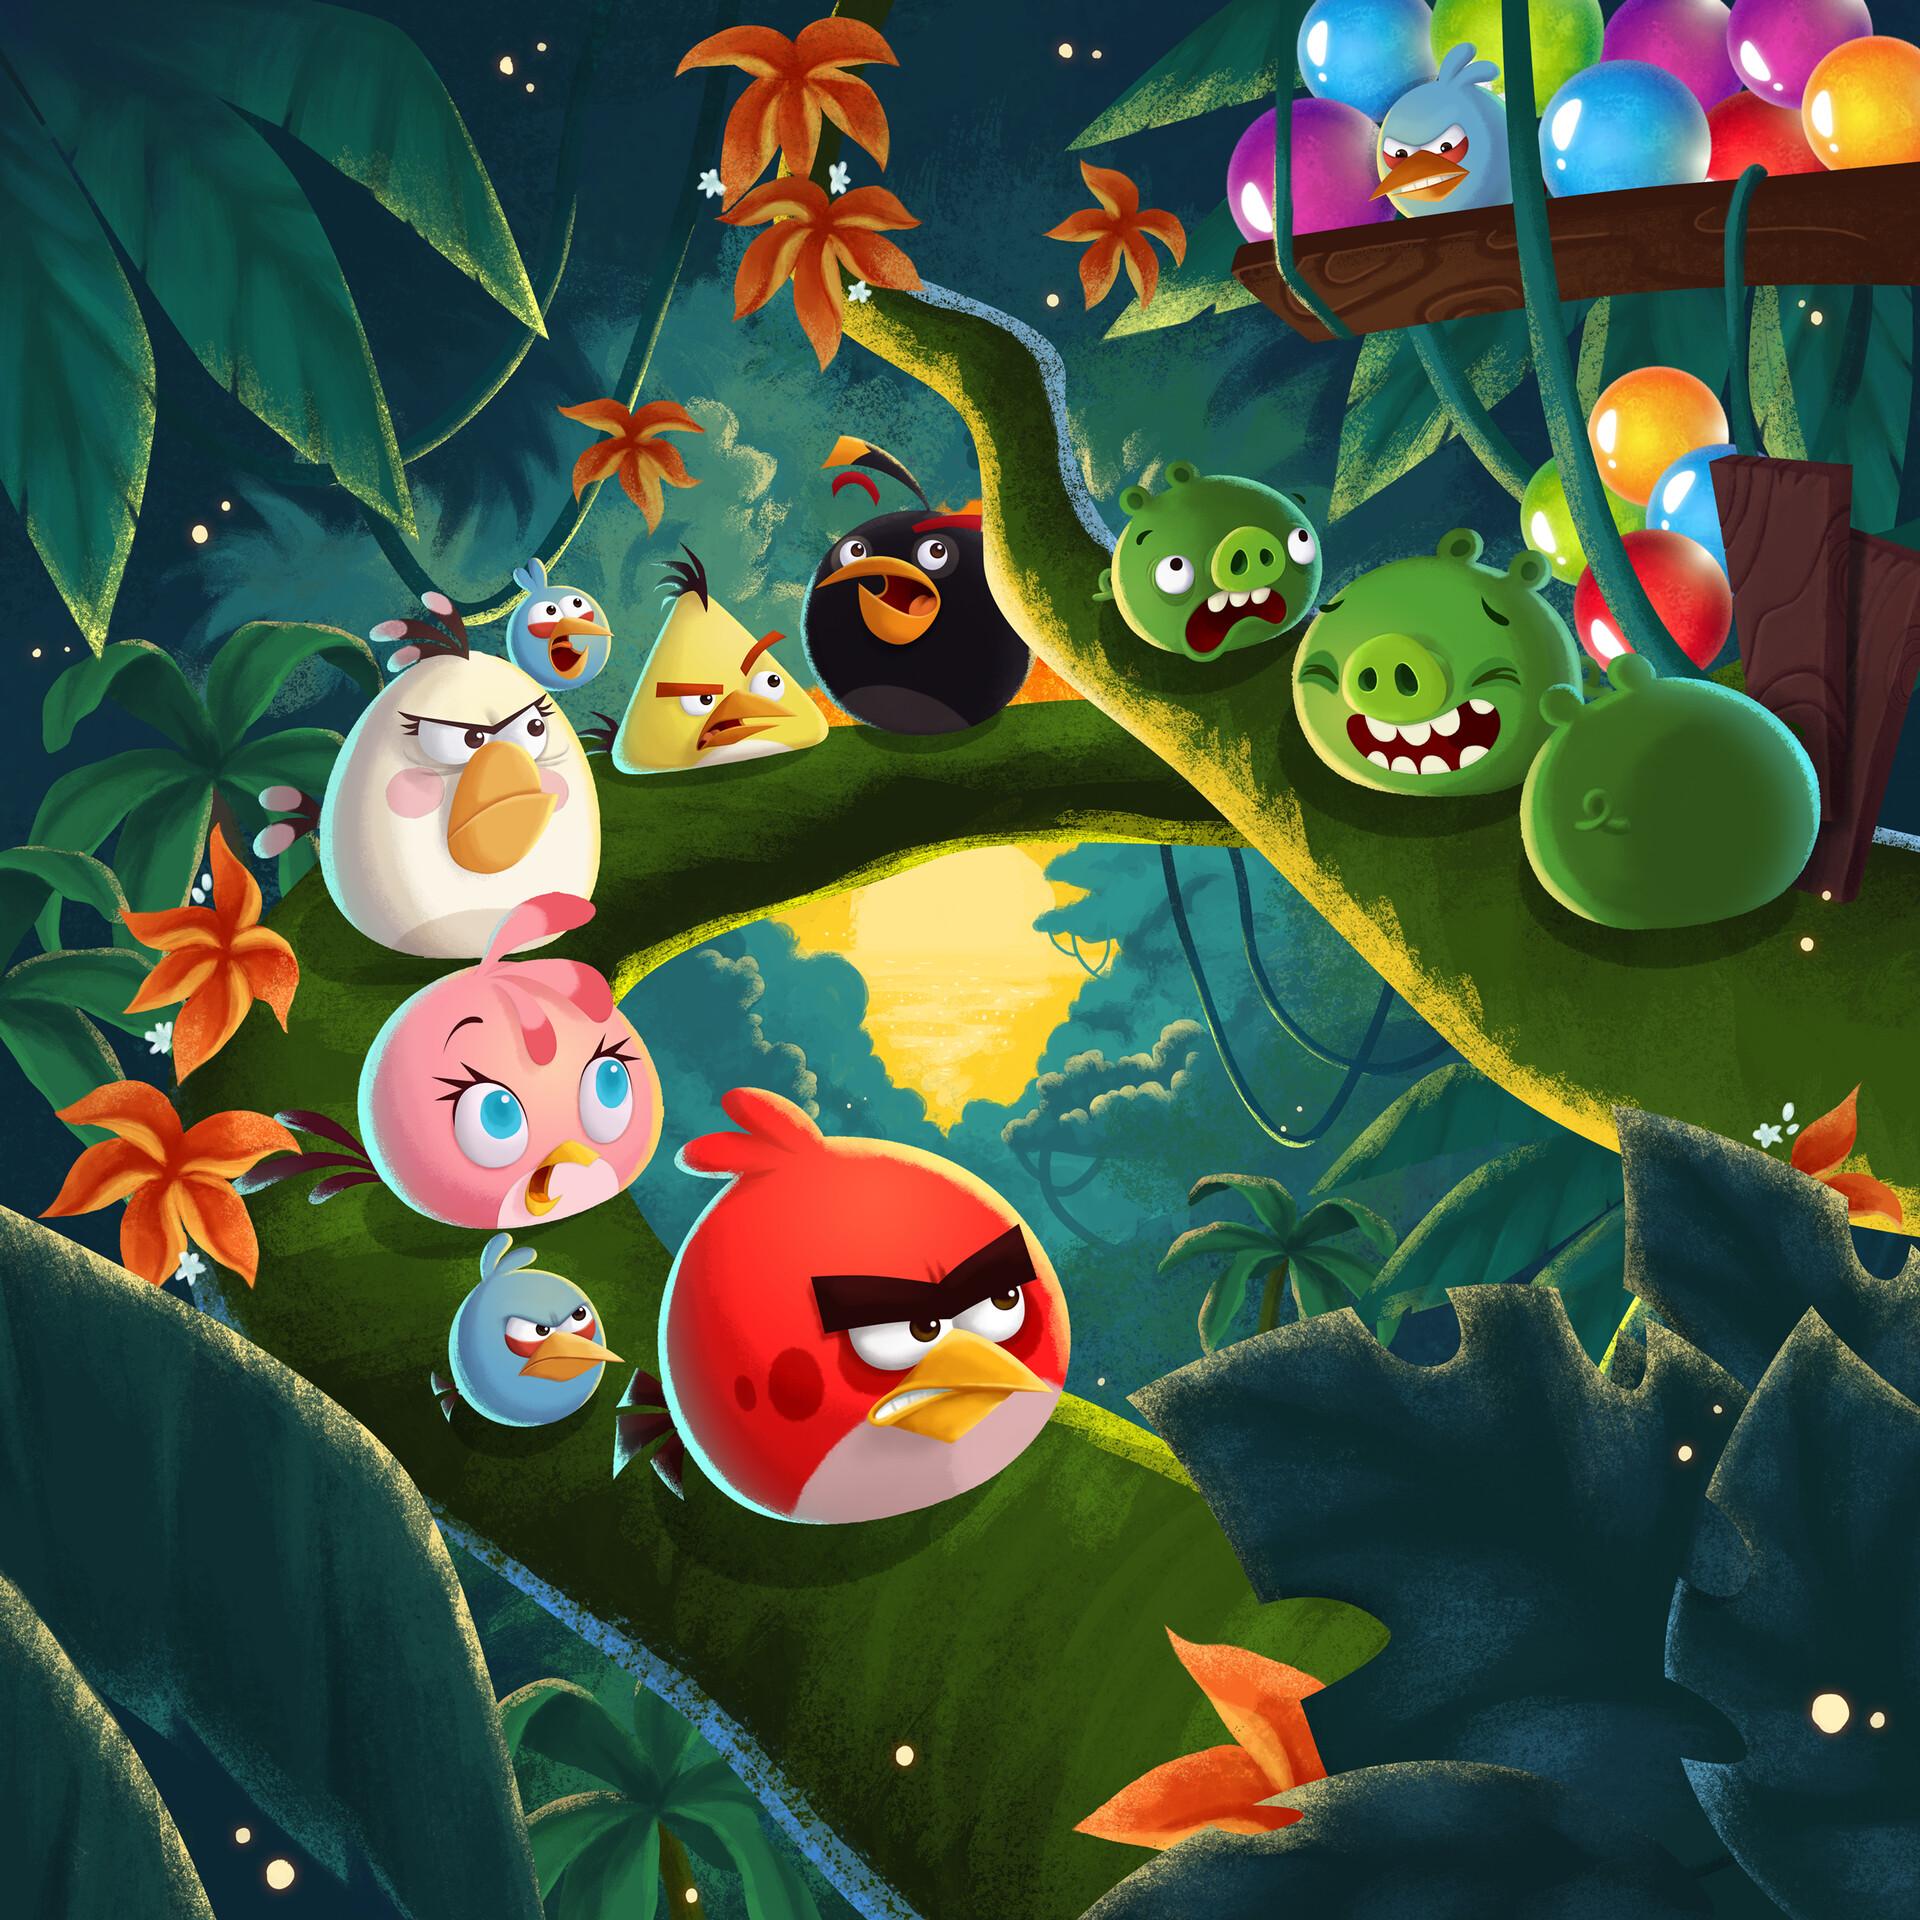 Salla Hakko - Angry Birds Friends